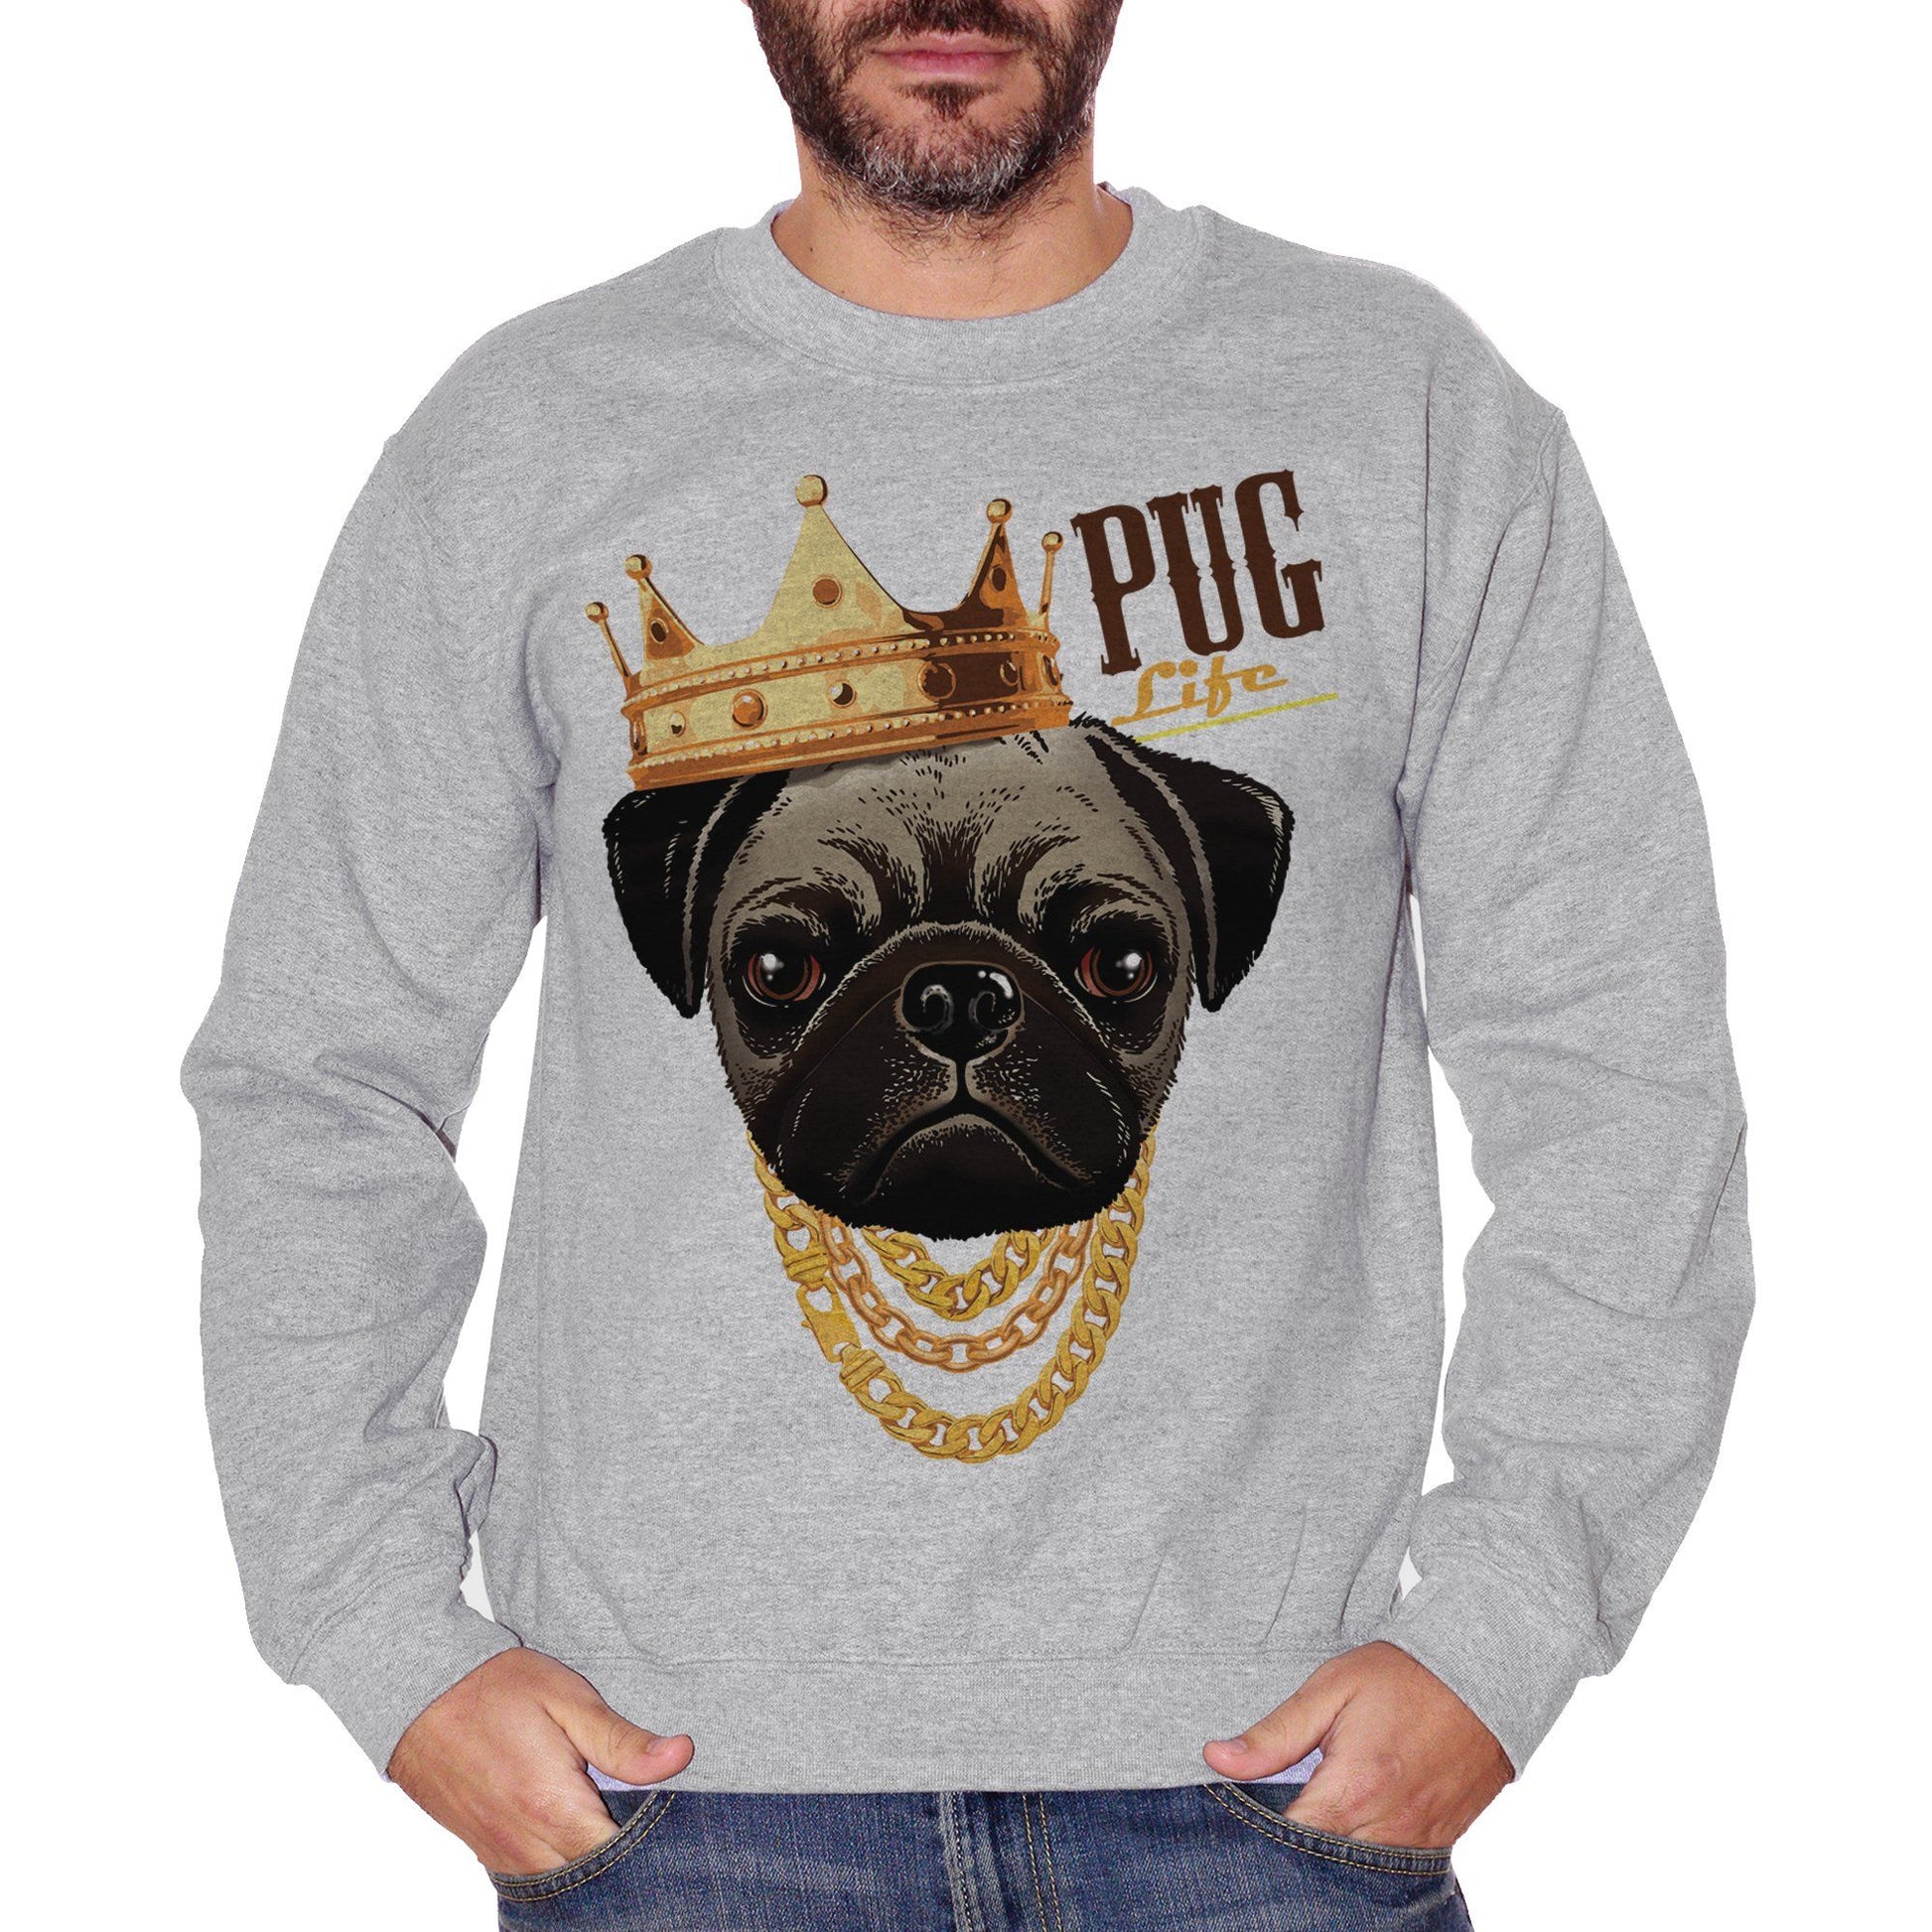 Black Felpa Girocollo Pug Life Carlino Cane Dog Pet Animali Gold Crown - SOCIAL CucShop